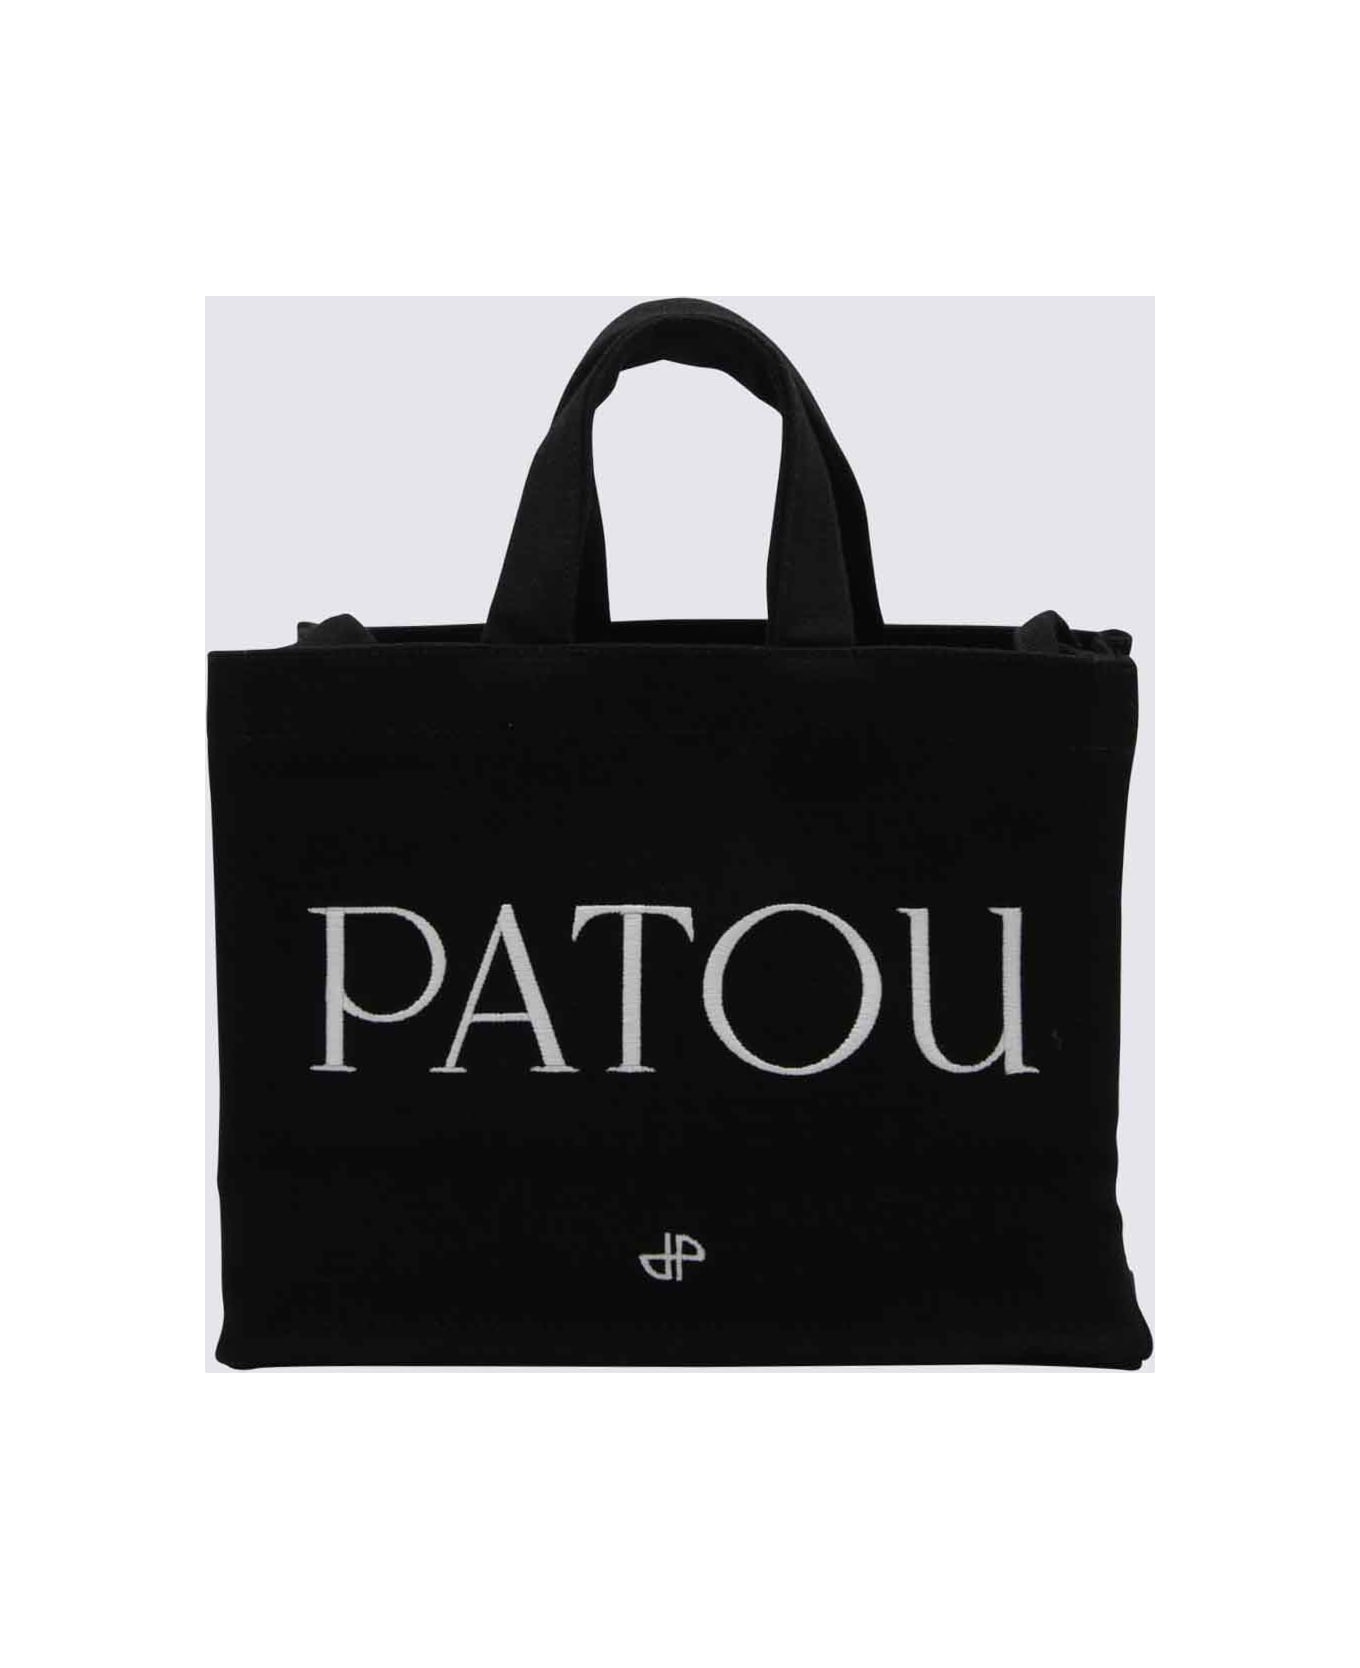 Patou Black Cotton Small Tote Bag - Black トートバッグ